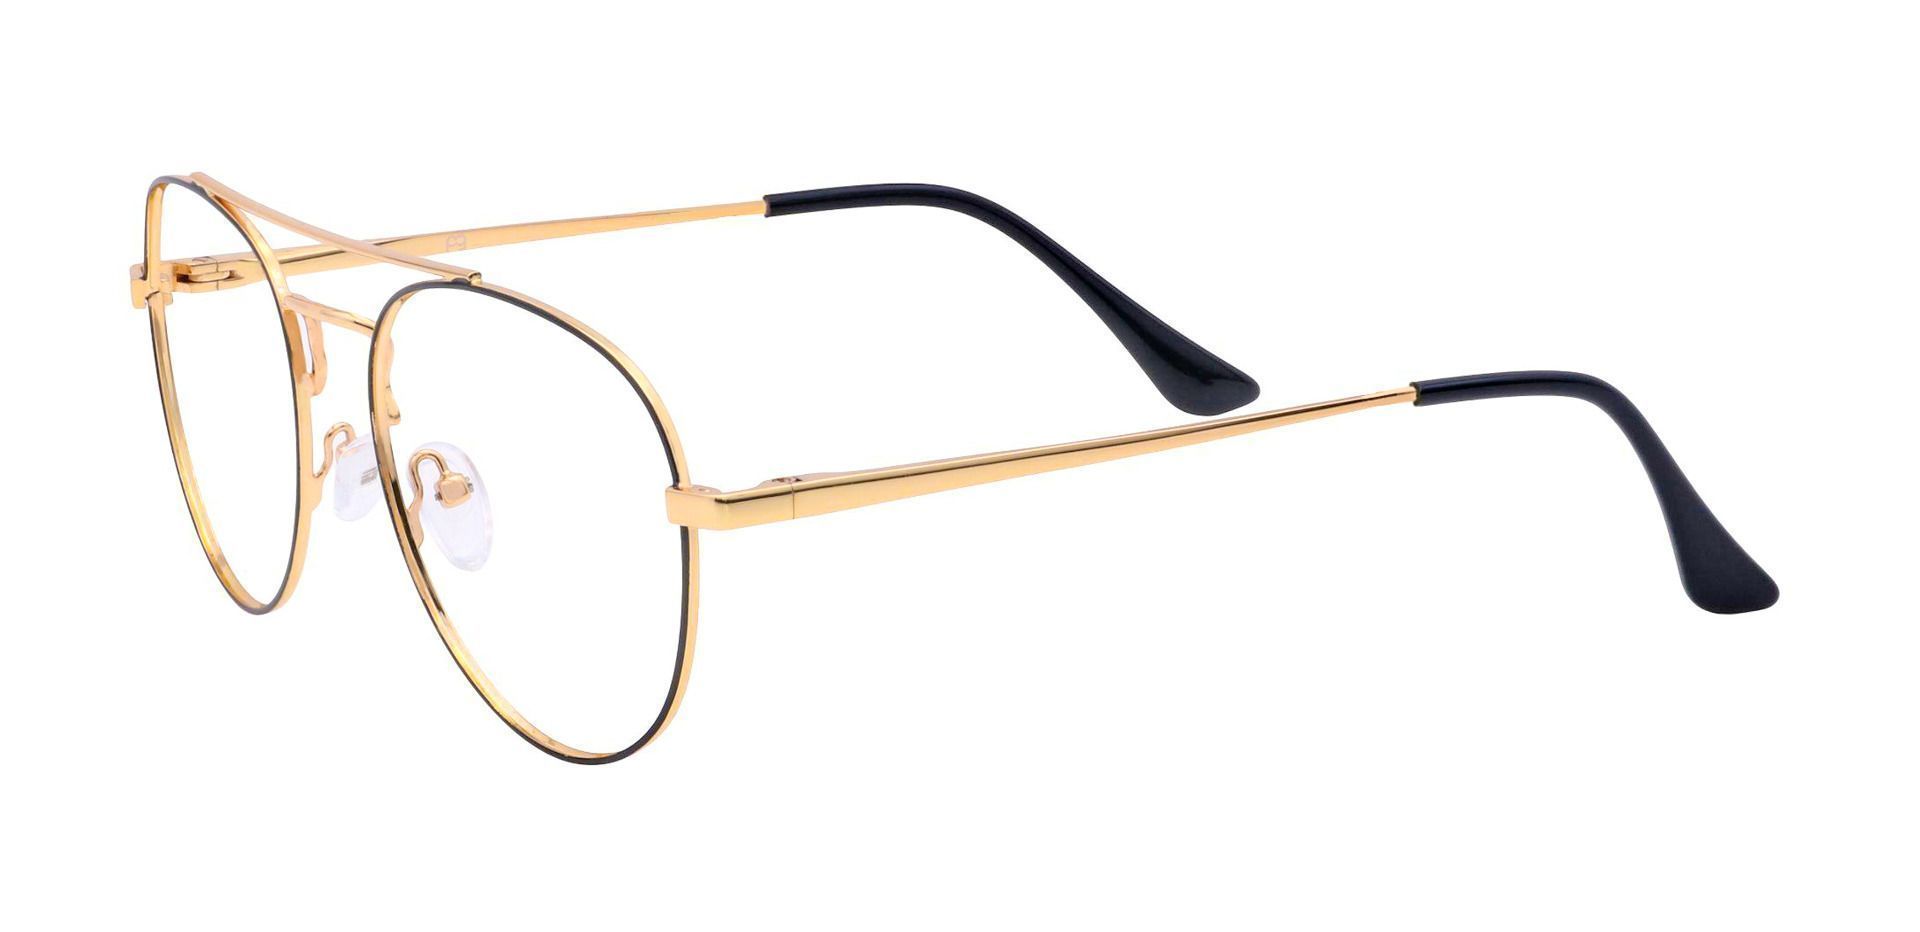 Trapp Aviator Eyeglasses Frame - Gold